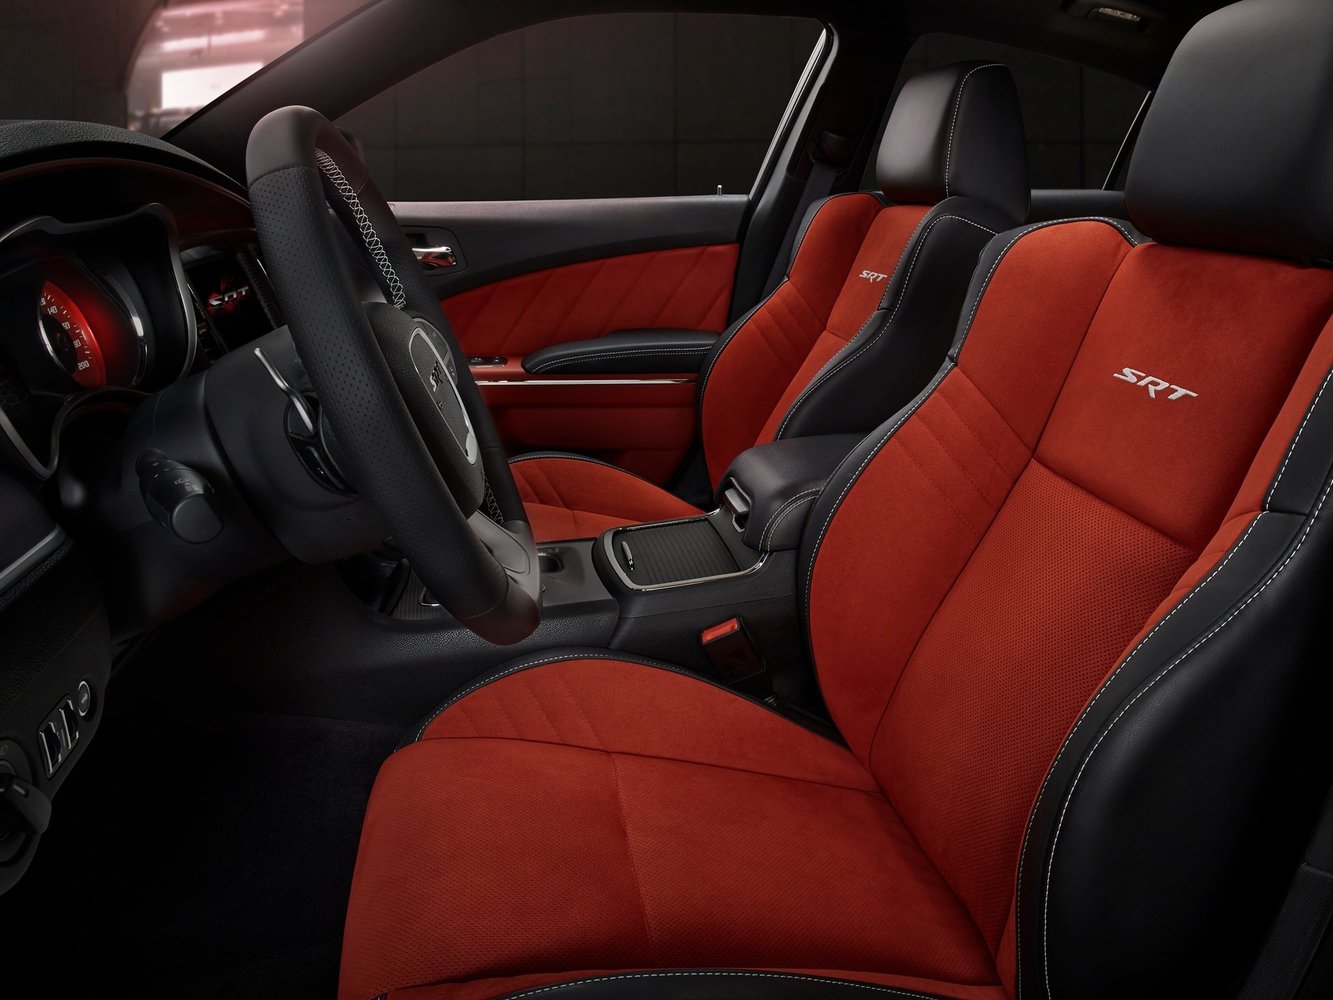 седан SRT Dodge Charger 2014 - 2016г выпуска модификация 6.2 AT (717 л.с.)